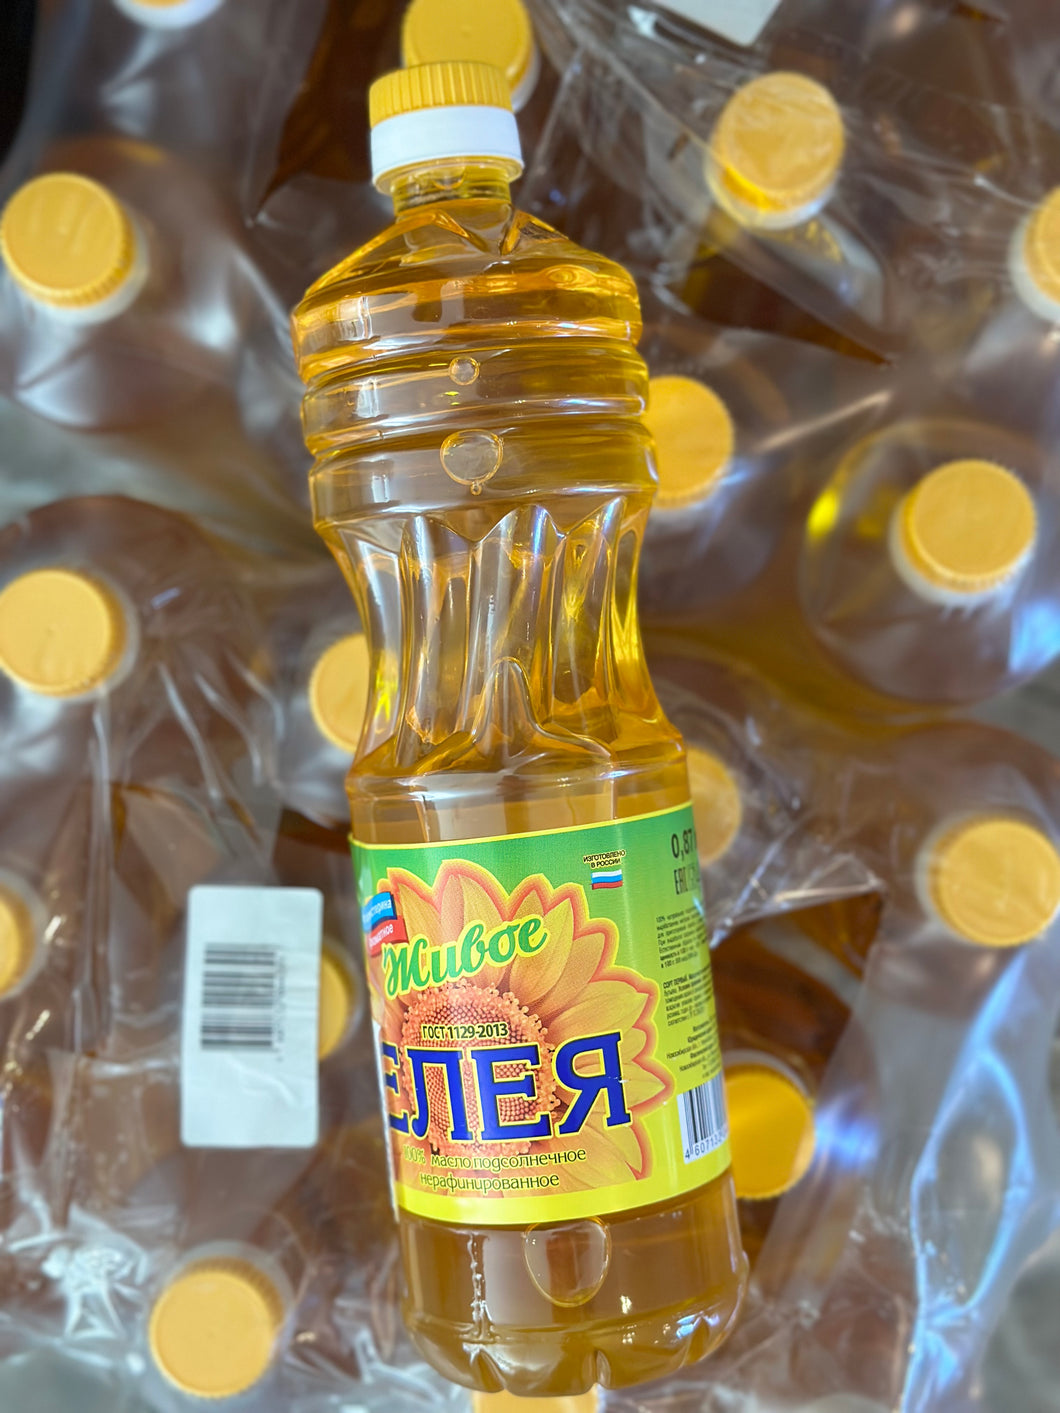 Sunflower Oil Eleya 1L